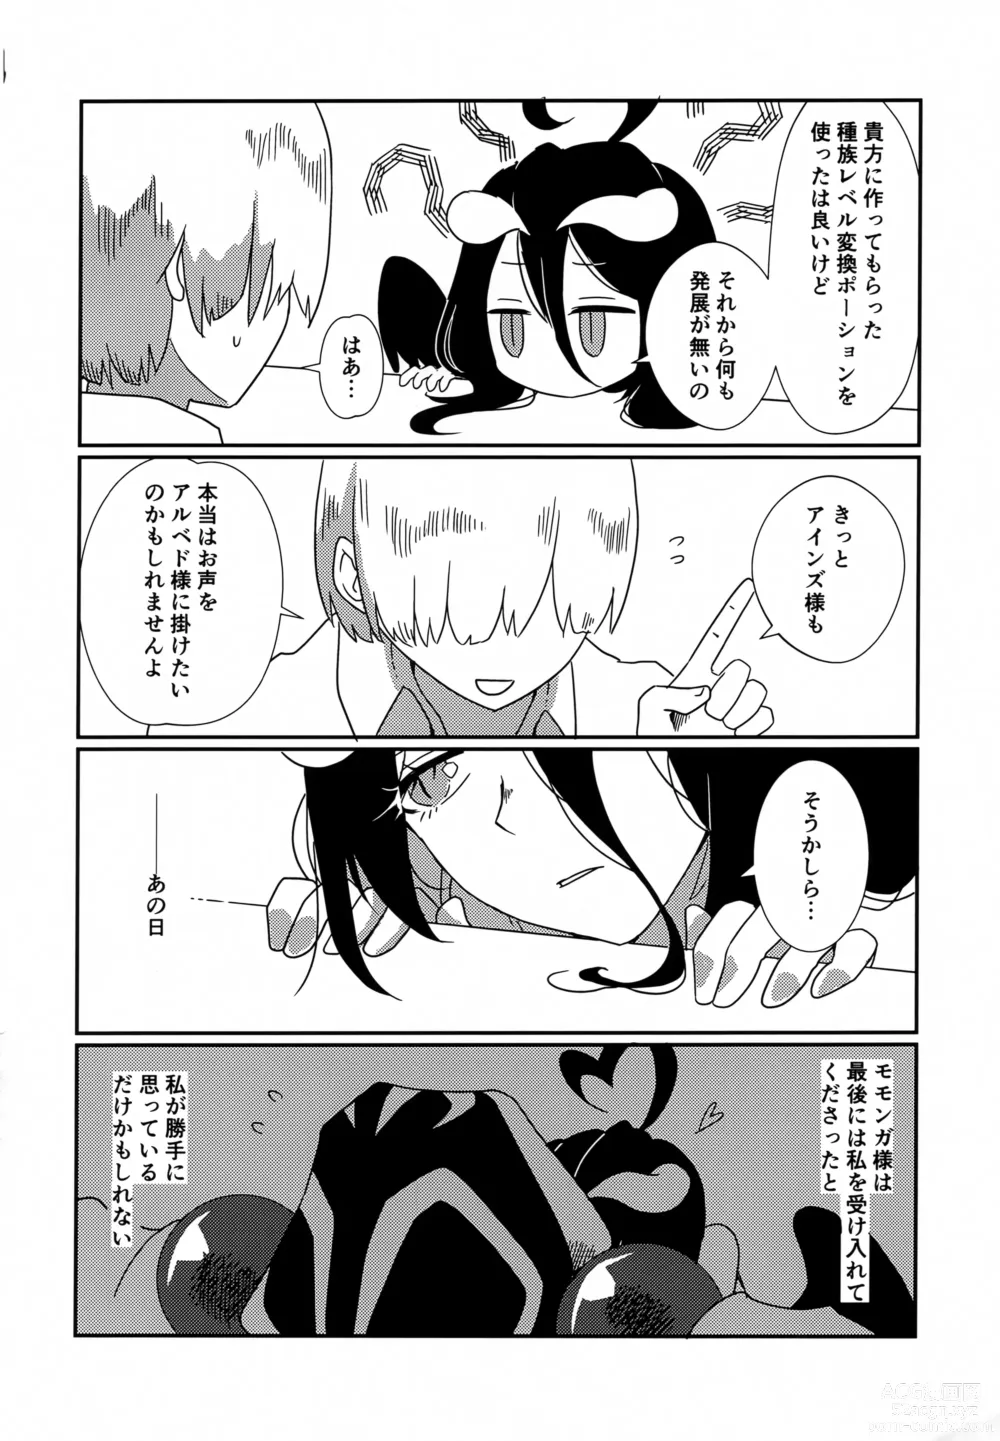 Page 3 of doujinshi Albedo-san to! Umi!